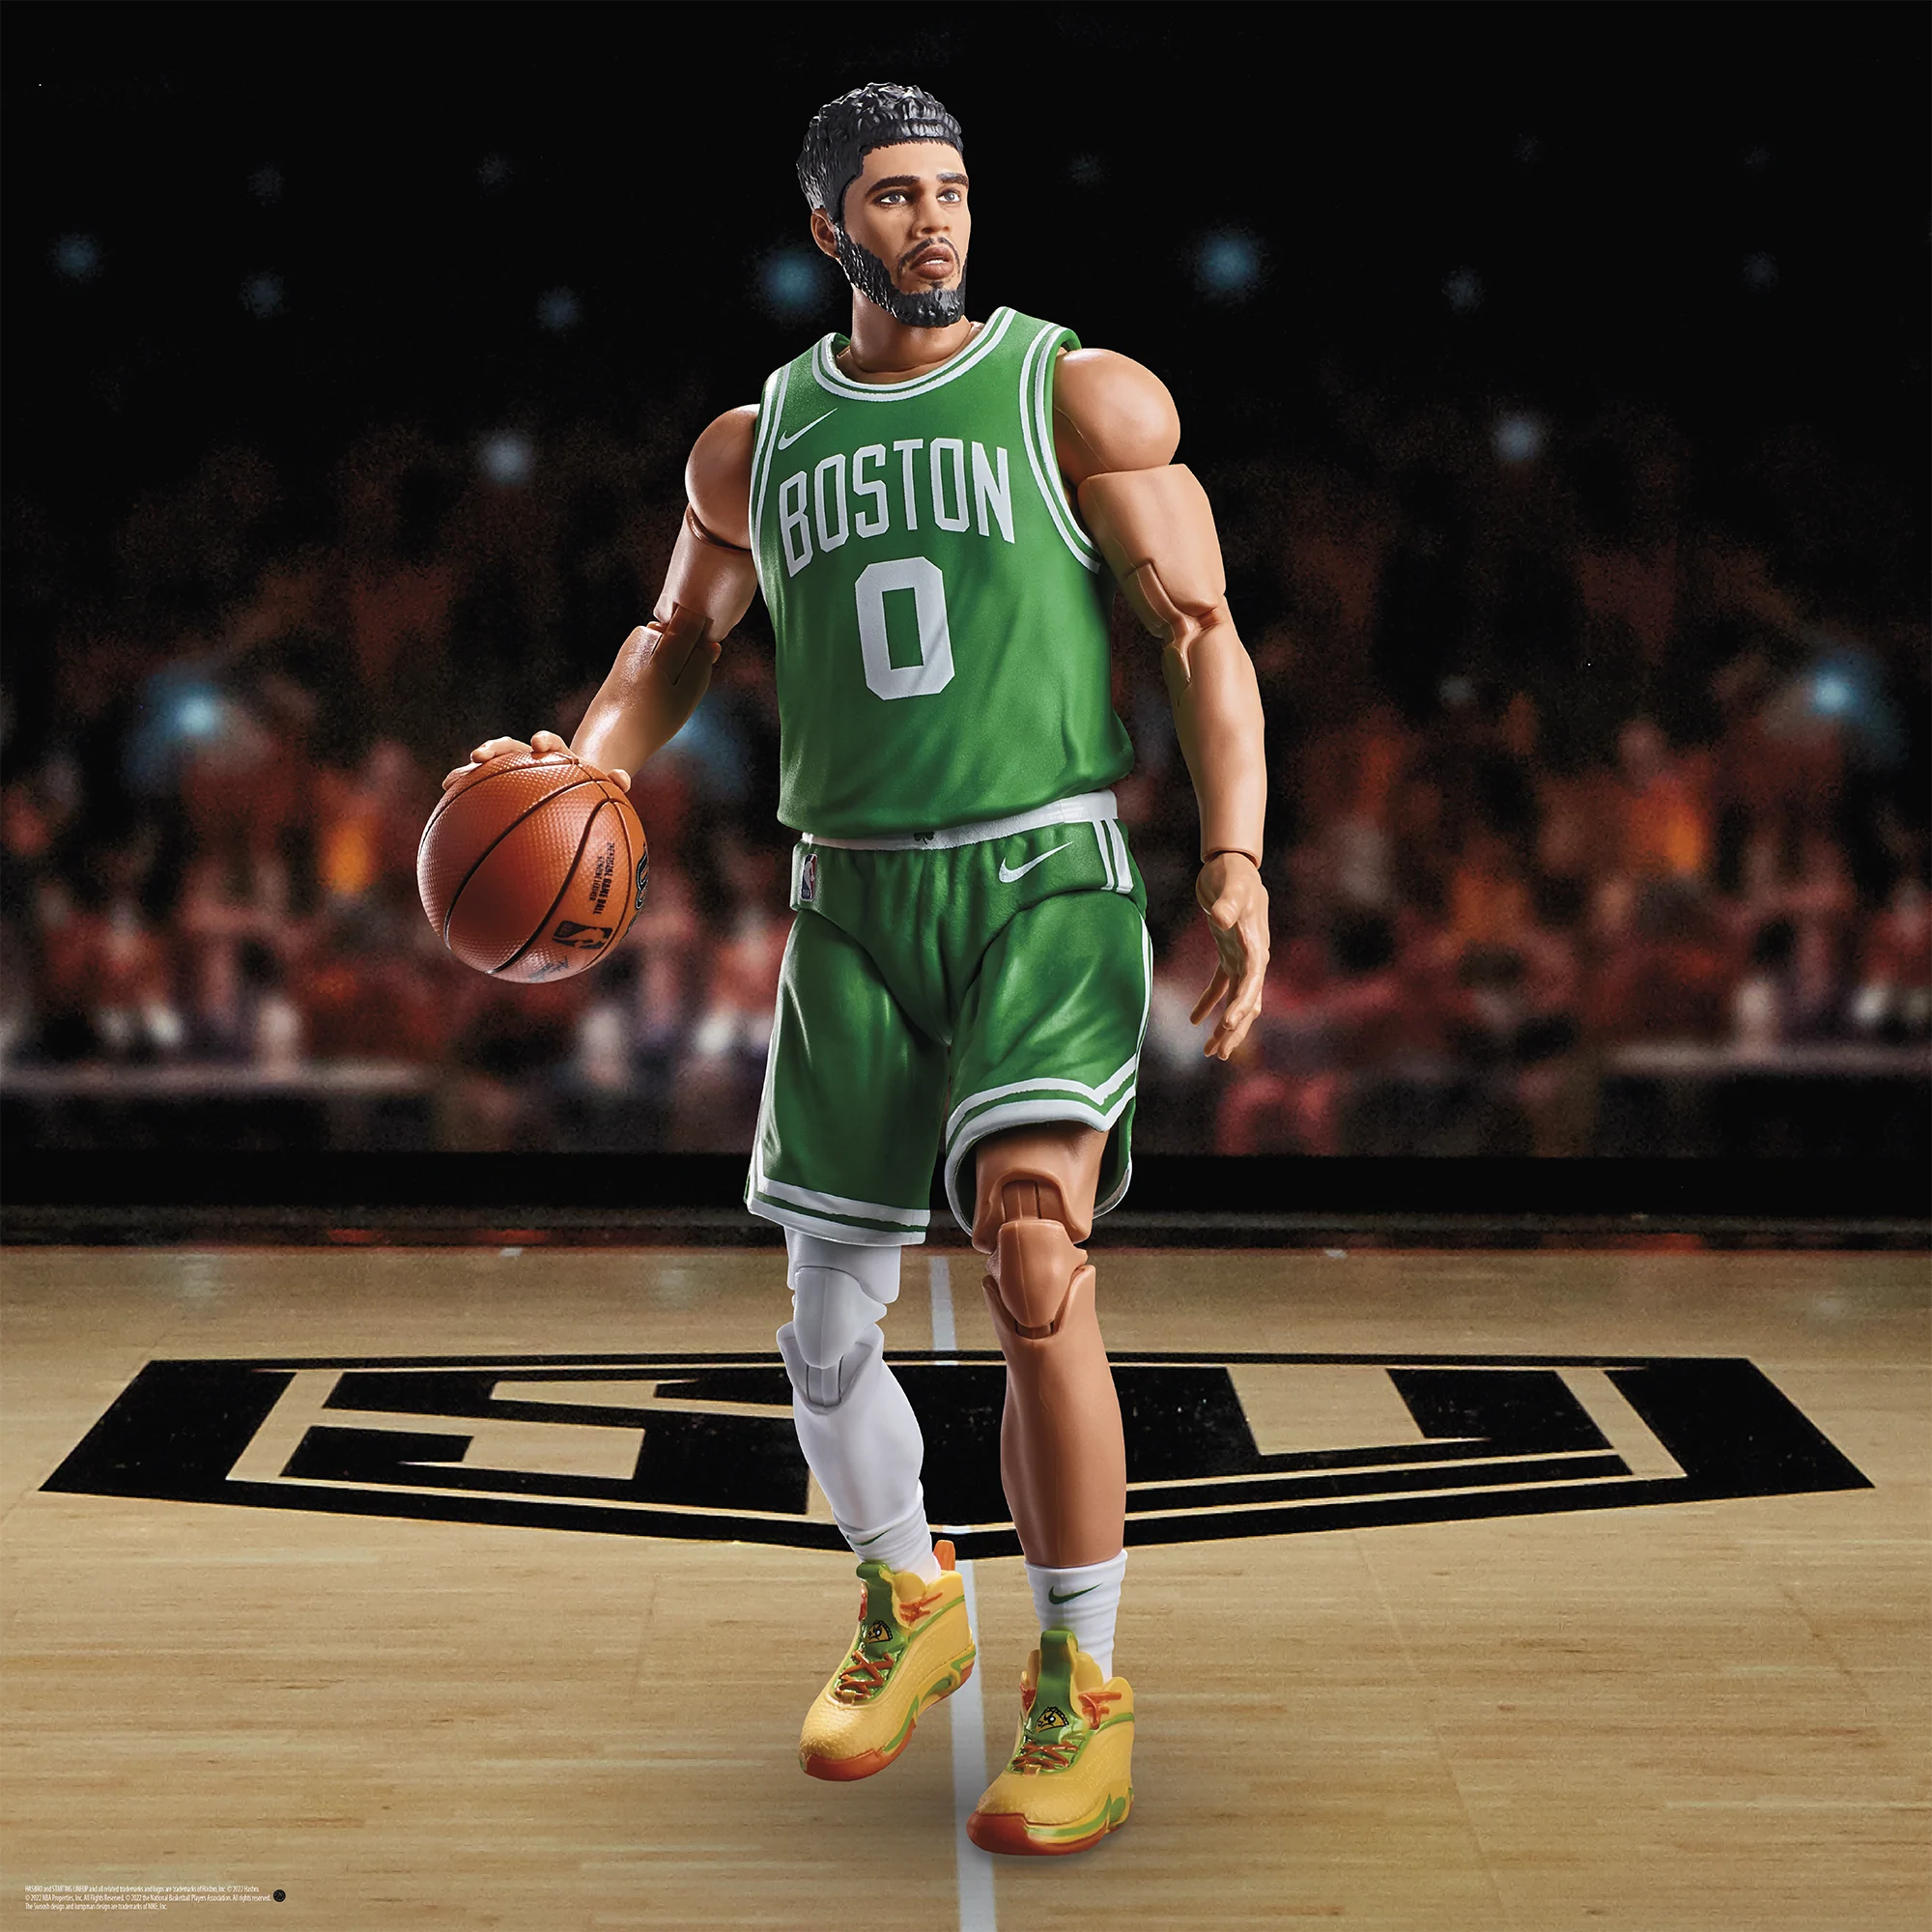 Hasbro - Starting Lineup Series 1 - NBA - Jayson Tatum - Marvelous Toys